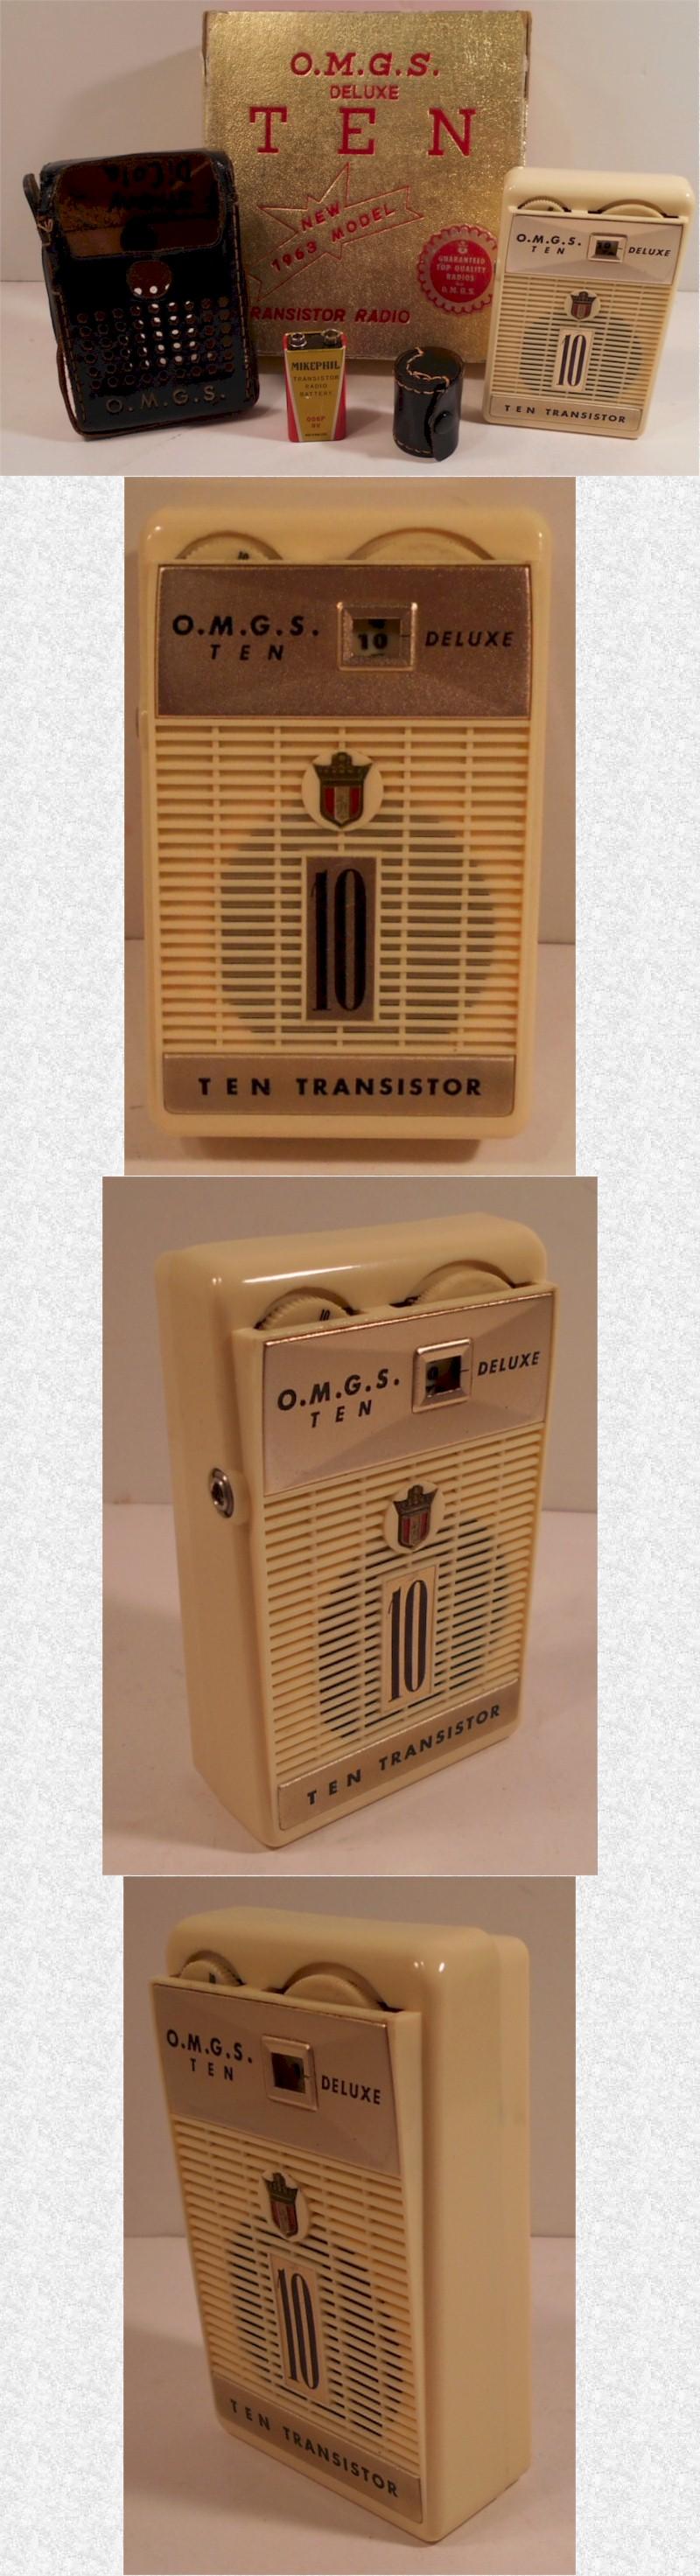 O.M.G.S. PTR-102N Pocket Transistor (1963)